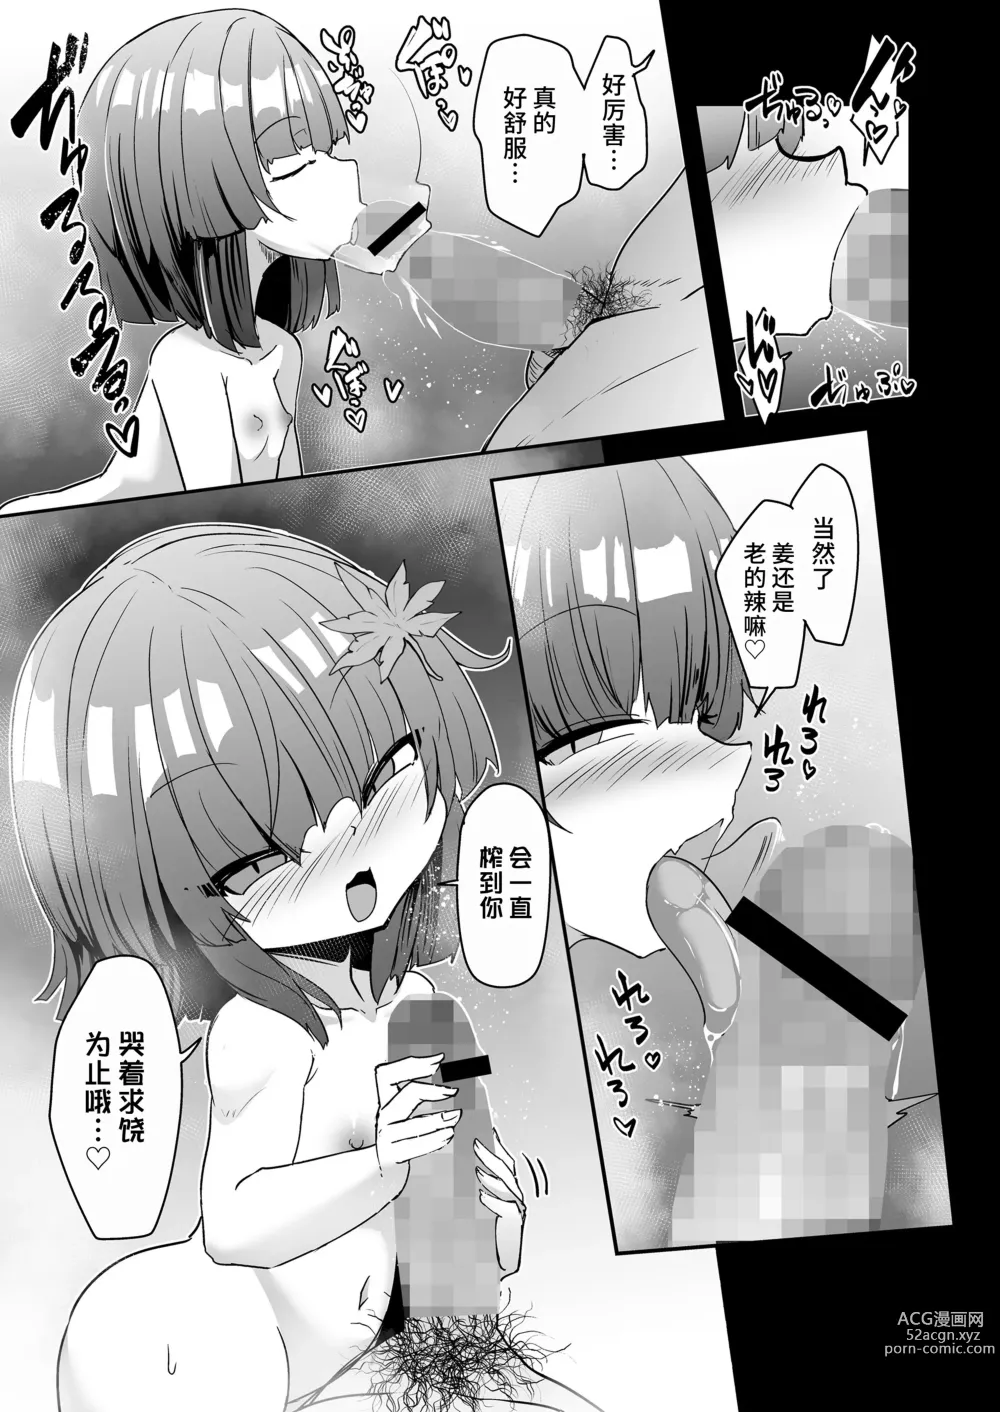 Page 37 of manga Oshiete Kureha-san 1+2